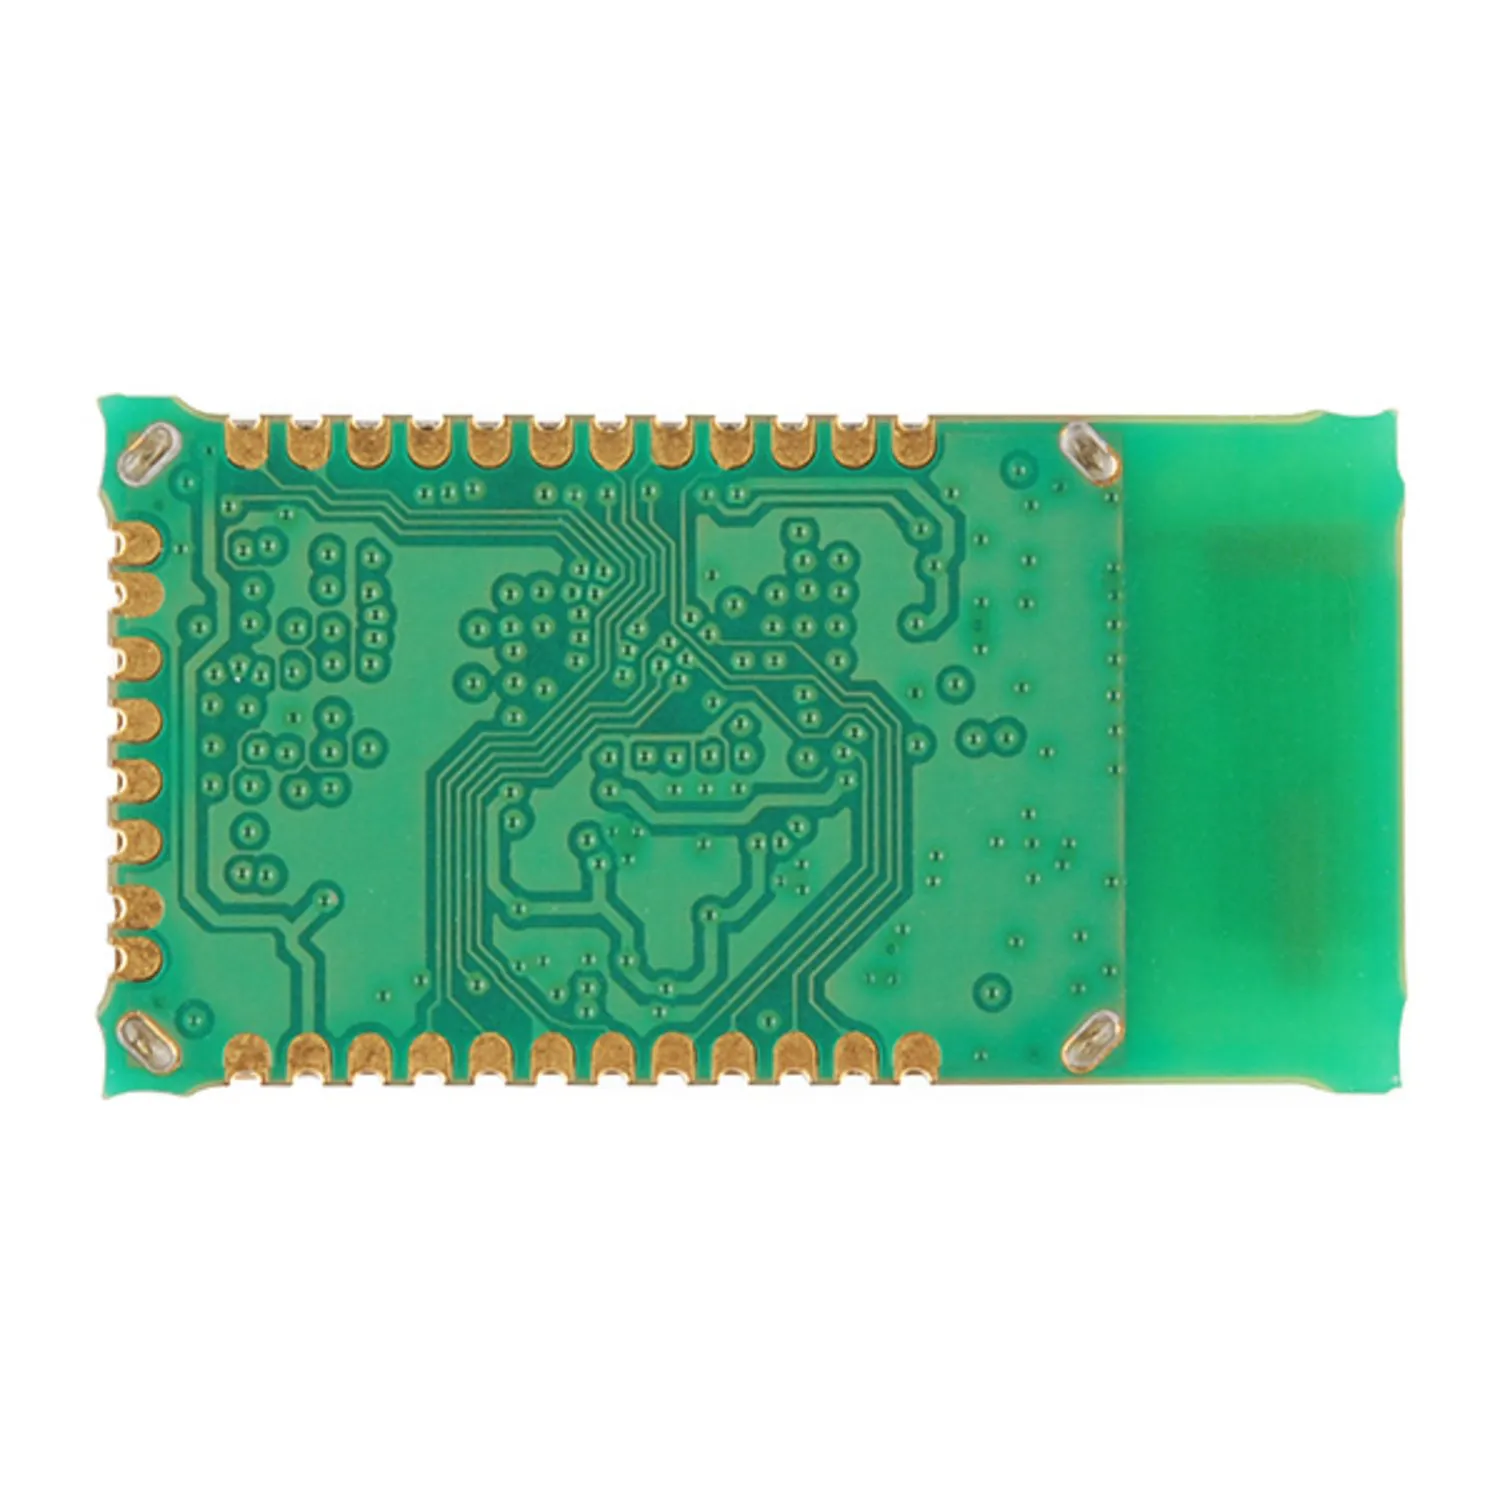 Photo of Bluetooth SMD Module - RN-41 (v6.15)